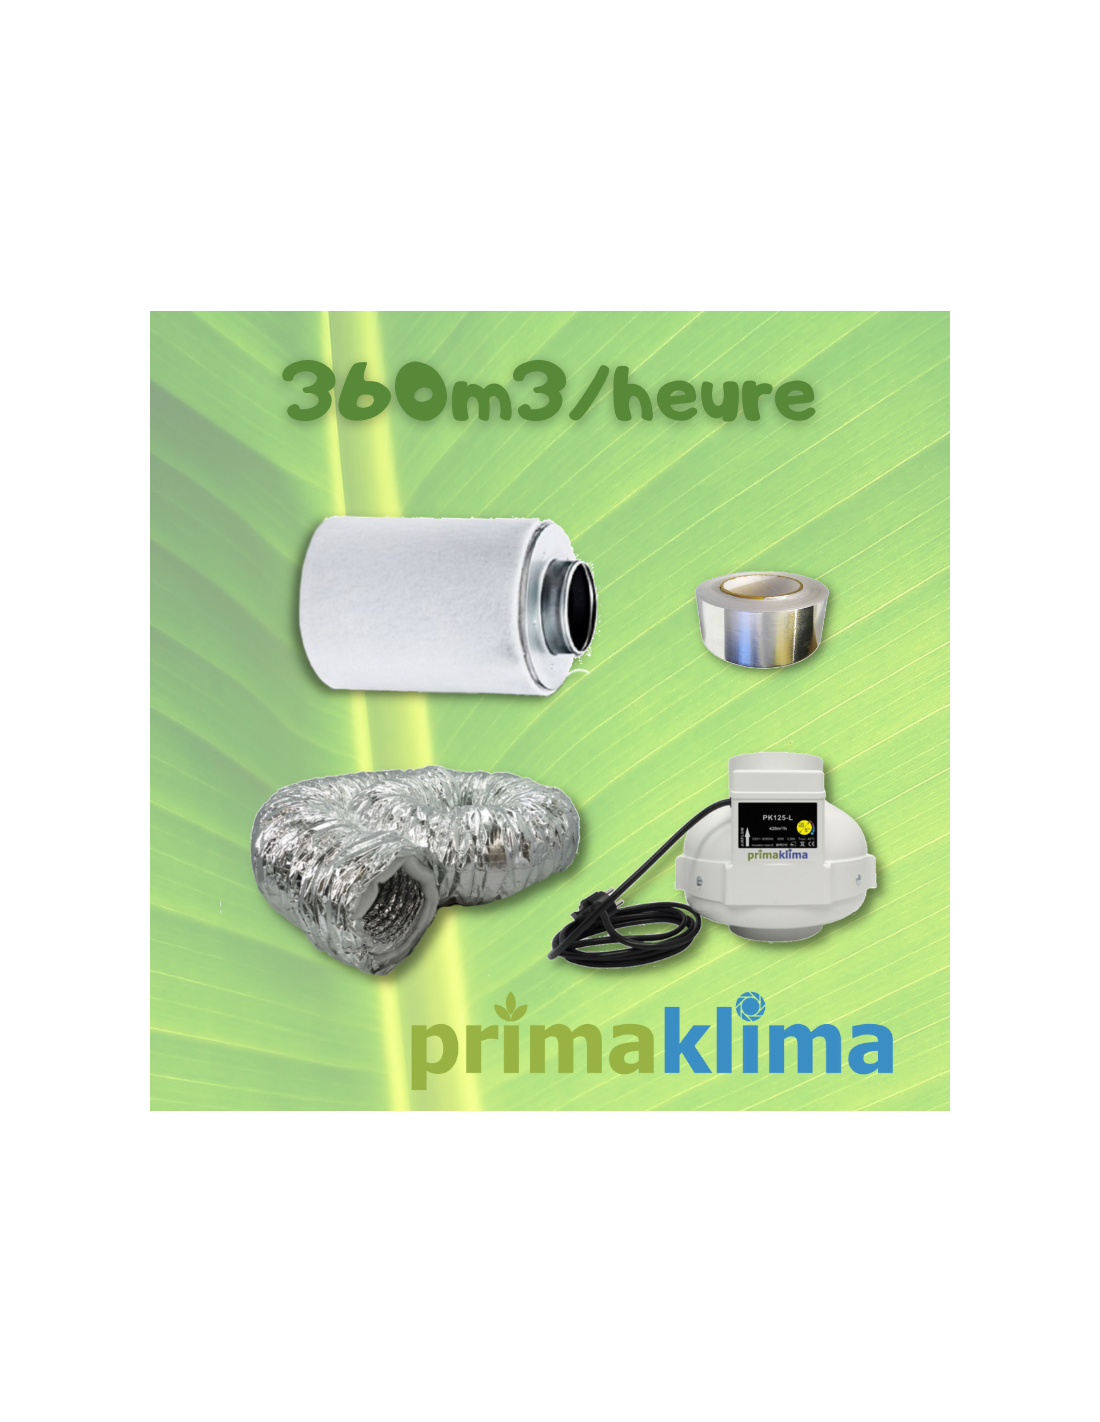 Filtre charbon Prima Klima - Eco-Line 360m3/h - sortie 125mm